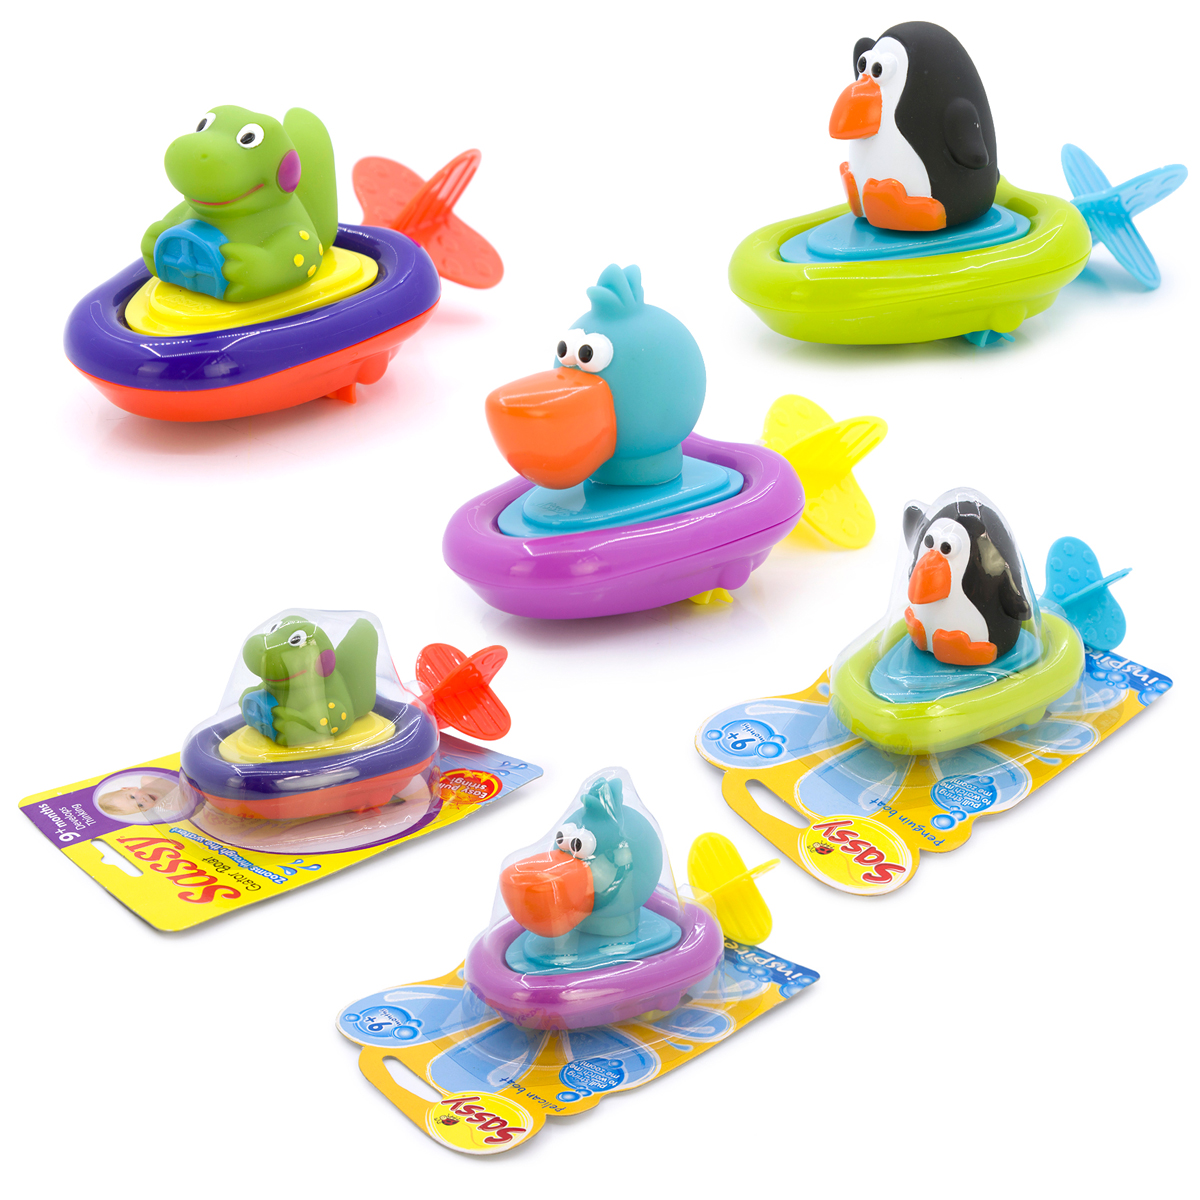 Sassy boat宝宝洗澡玩具拉线发条会跑 游泳 戏水动物造型三款套装